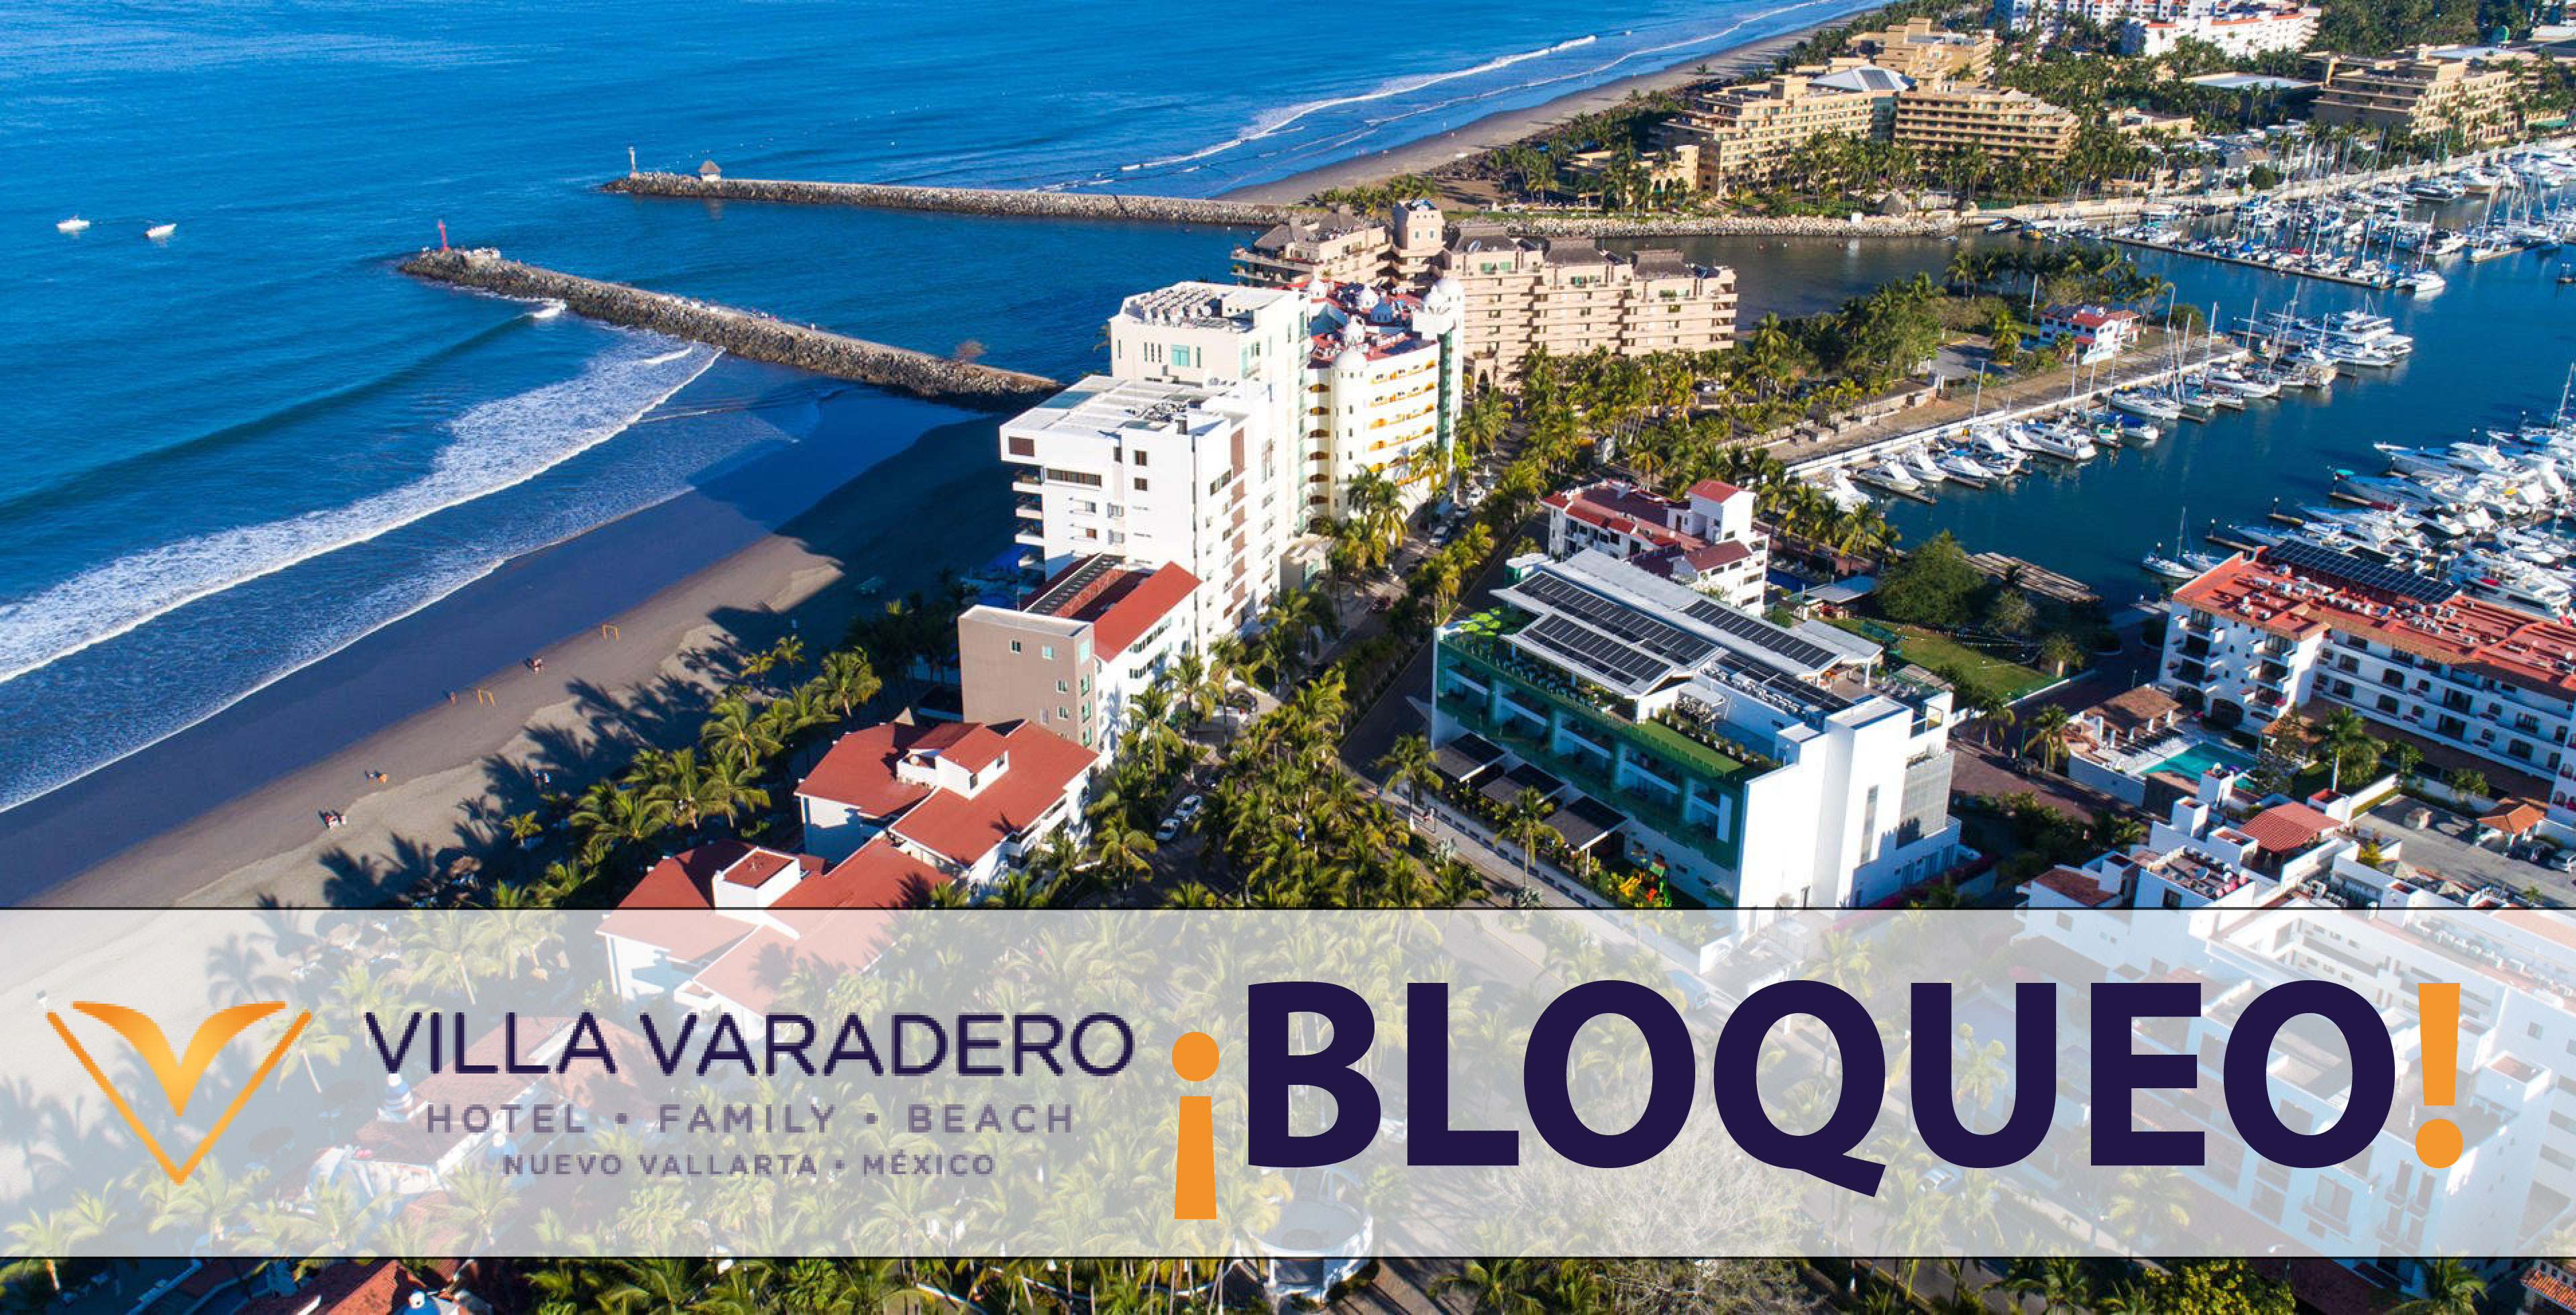 Villa Varadero Hotel And Suites (bloqueo)